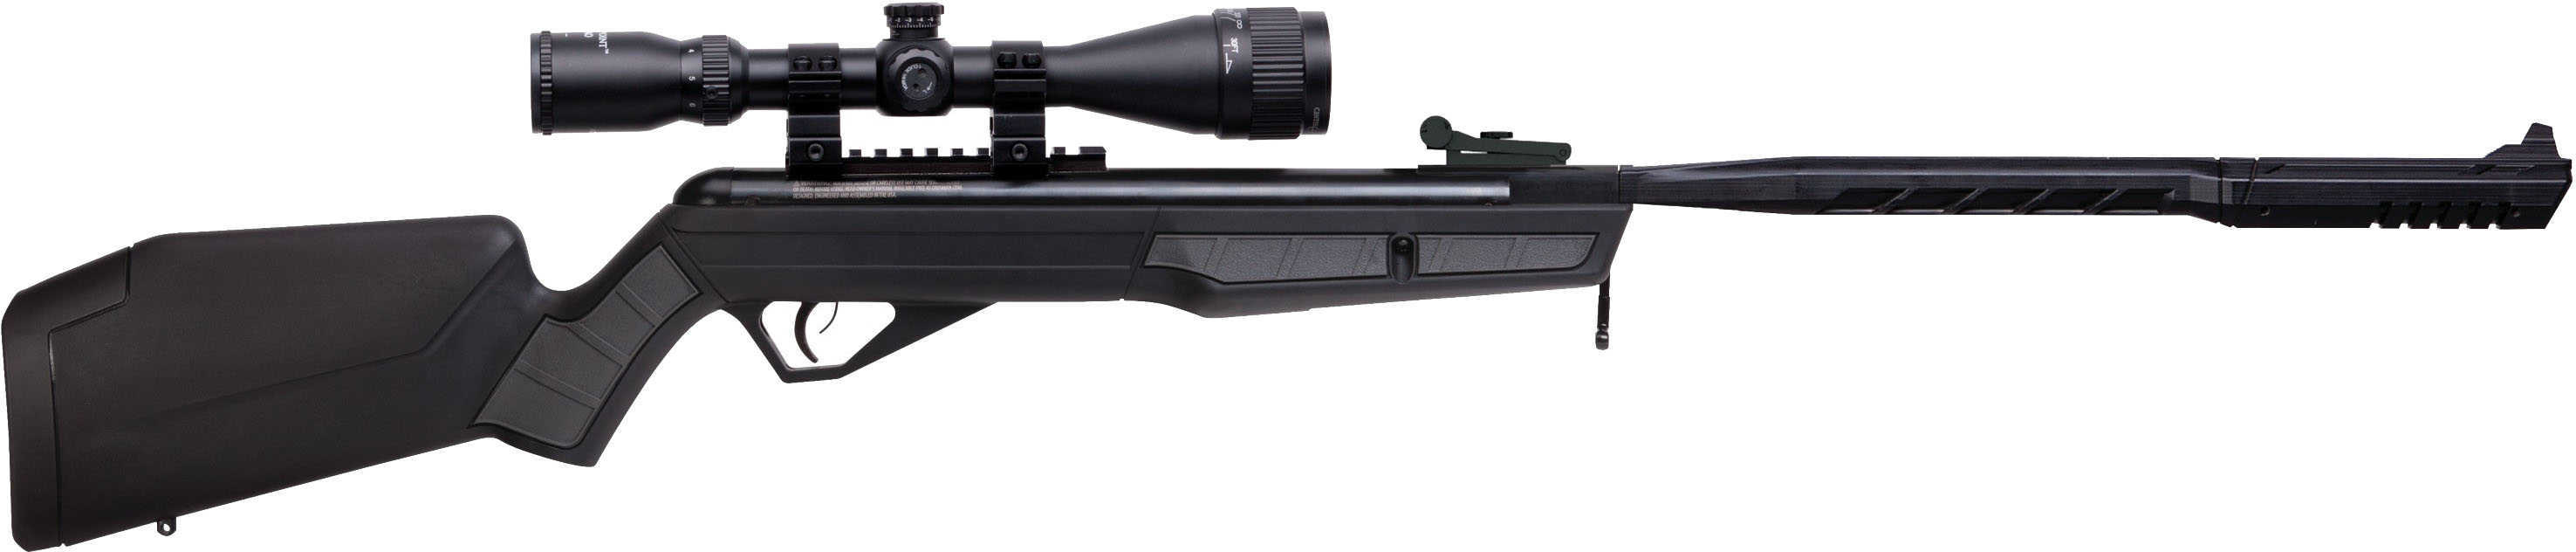 Crosman Nitro Piston Elite Powered Break Barrel Air Rifle With CenterPoint 3-9x40mm Scope